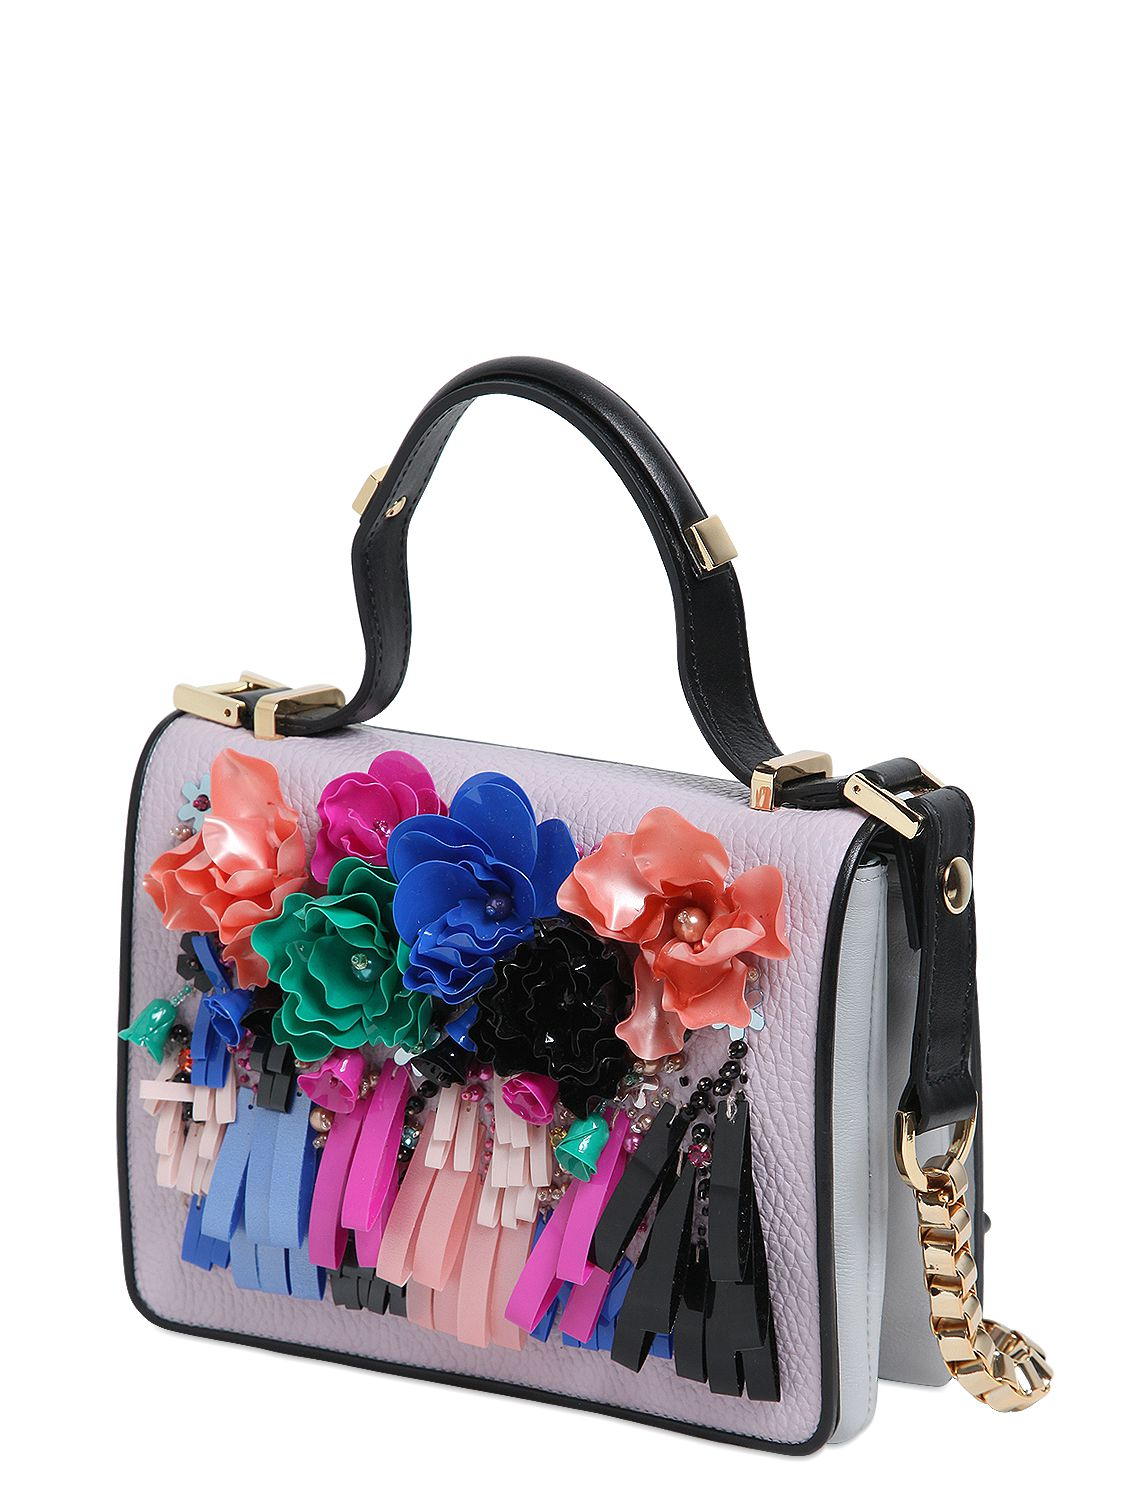 Lyst - Giancarlo petriglia Flowers Leather Top Handle Bag